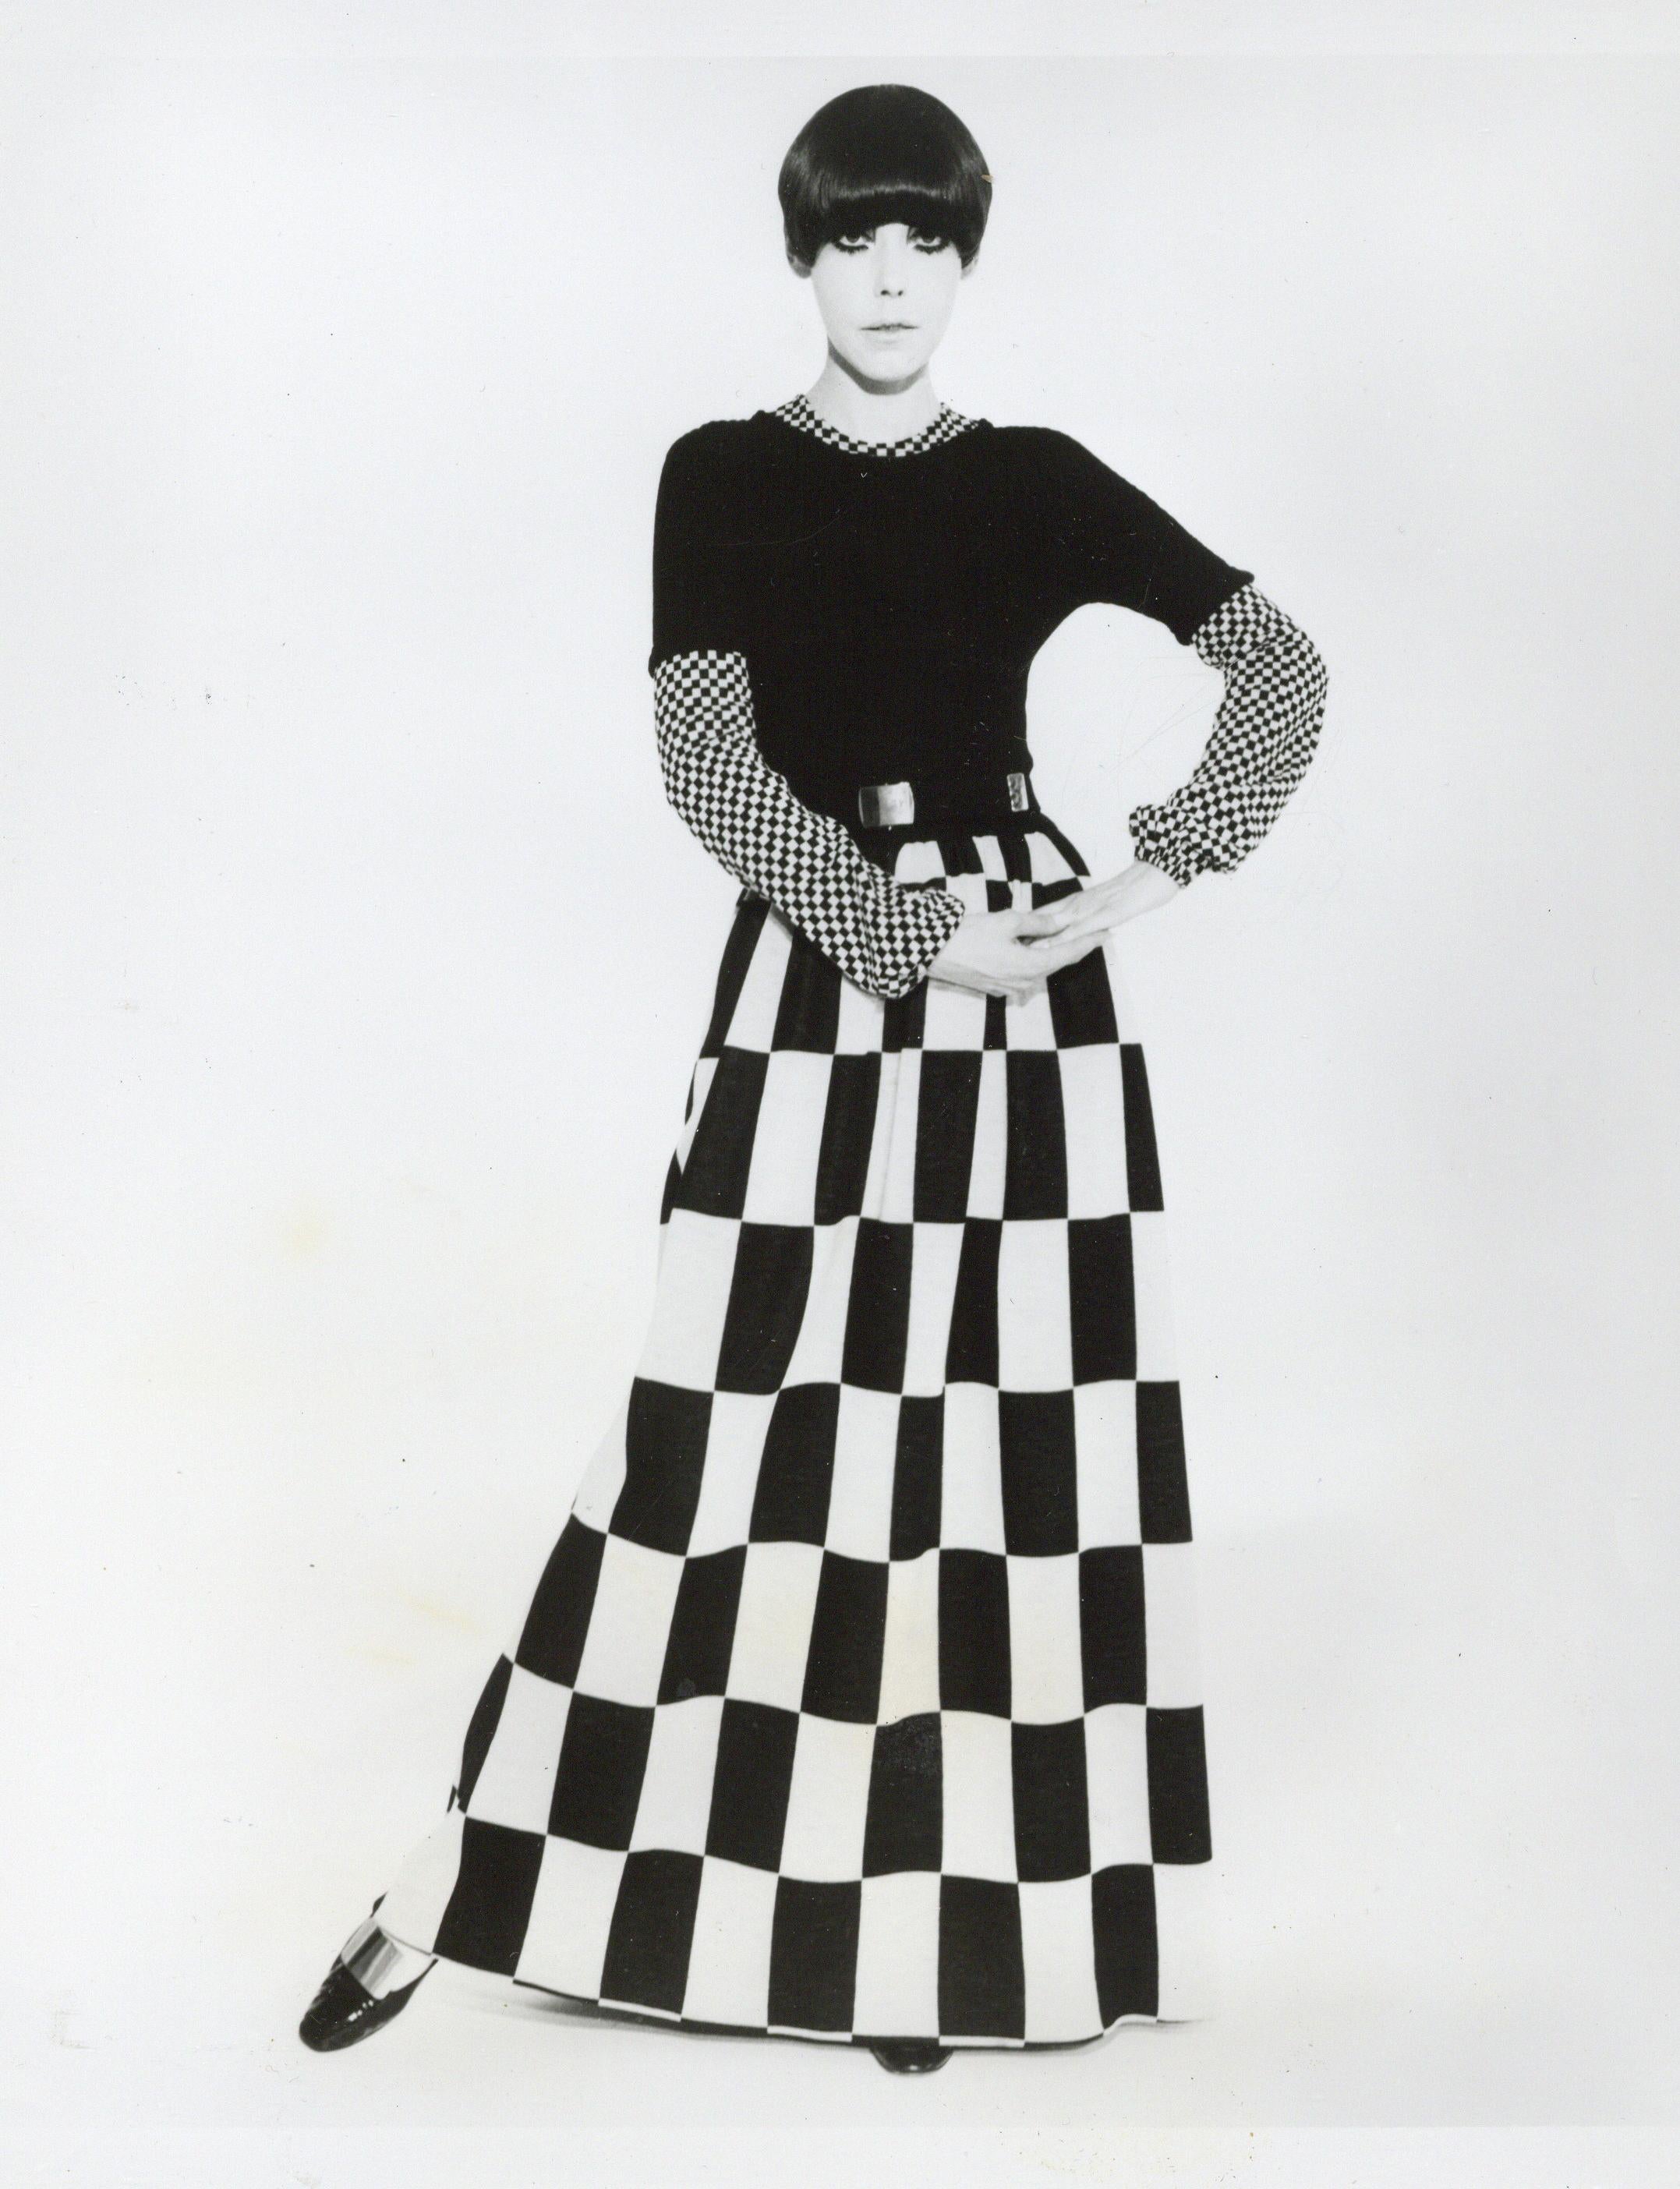 Unknown Portrait Photograph - 70s Fashion: Model in Sweater Dress Vintage Original Photograph